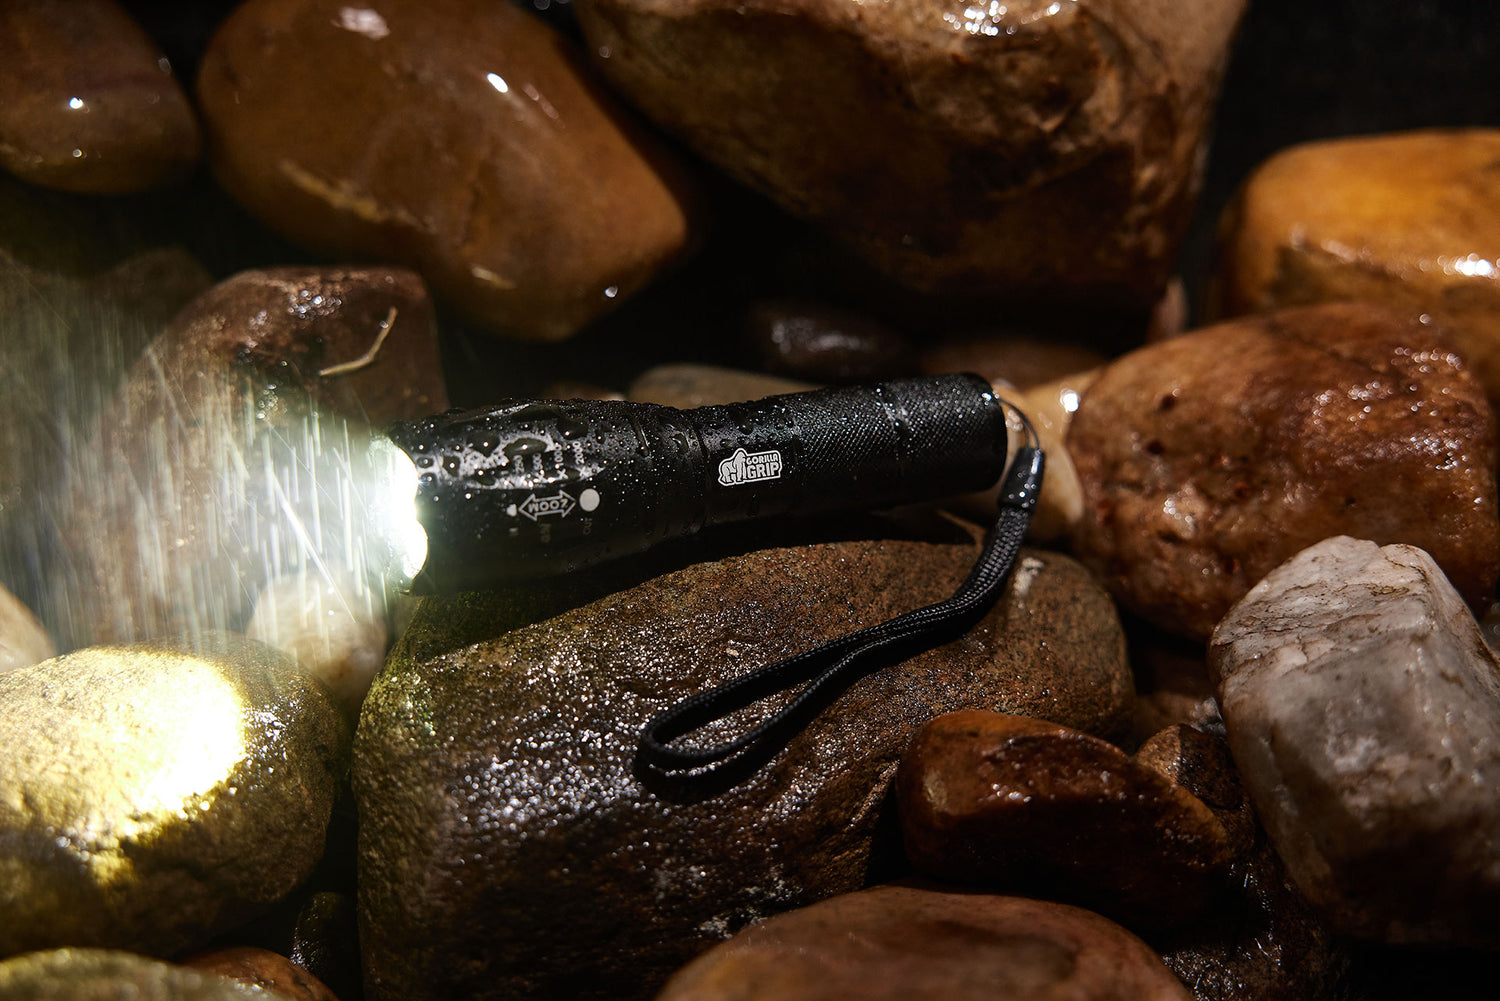 A Gorilla Grip flashlight shines on wet rocks, showcasing durability and brightness